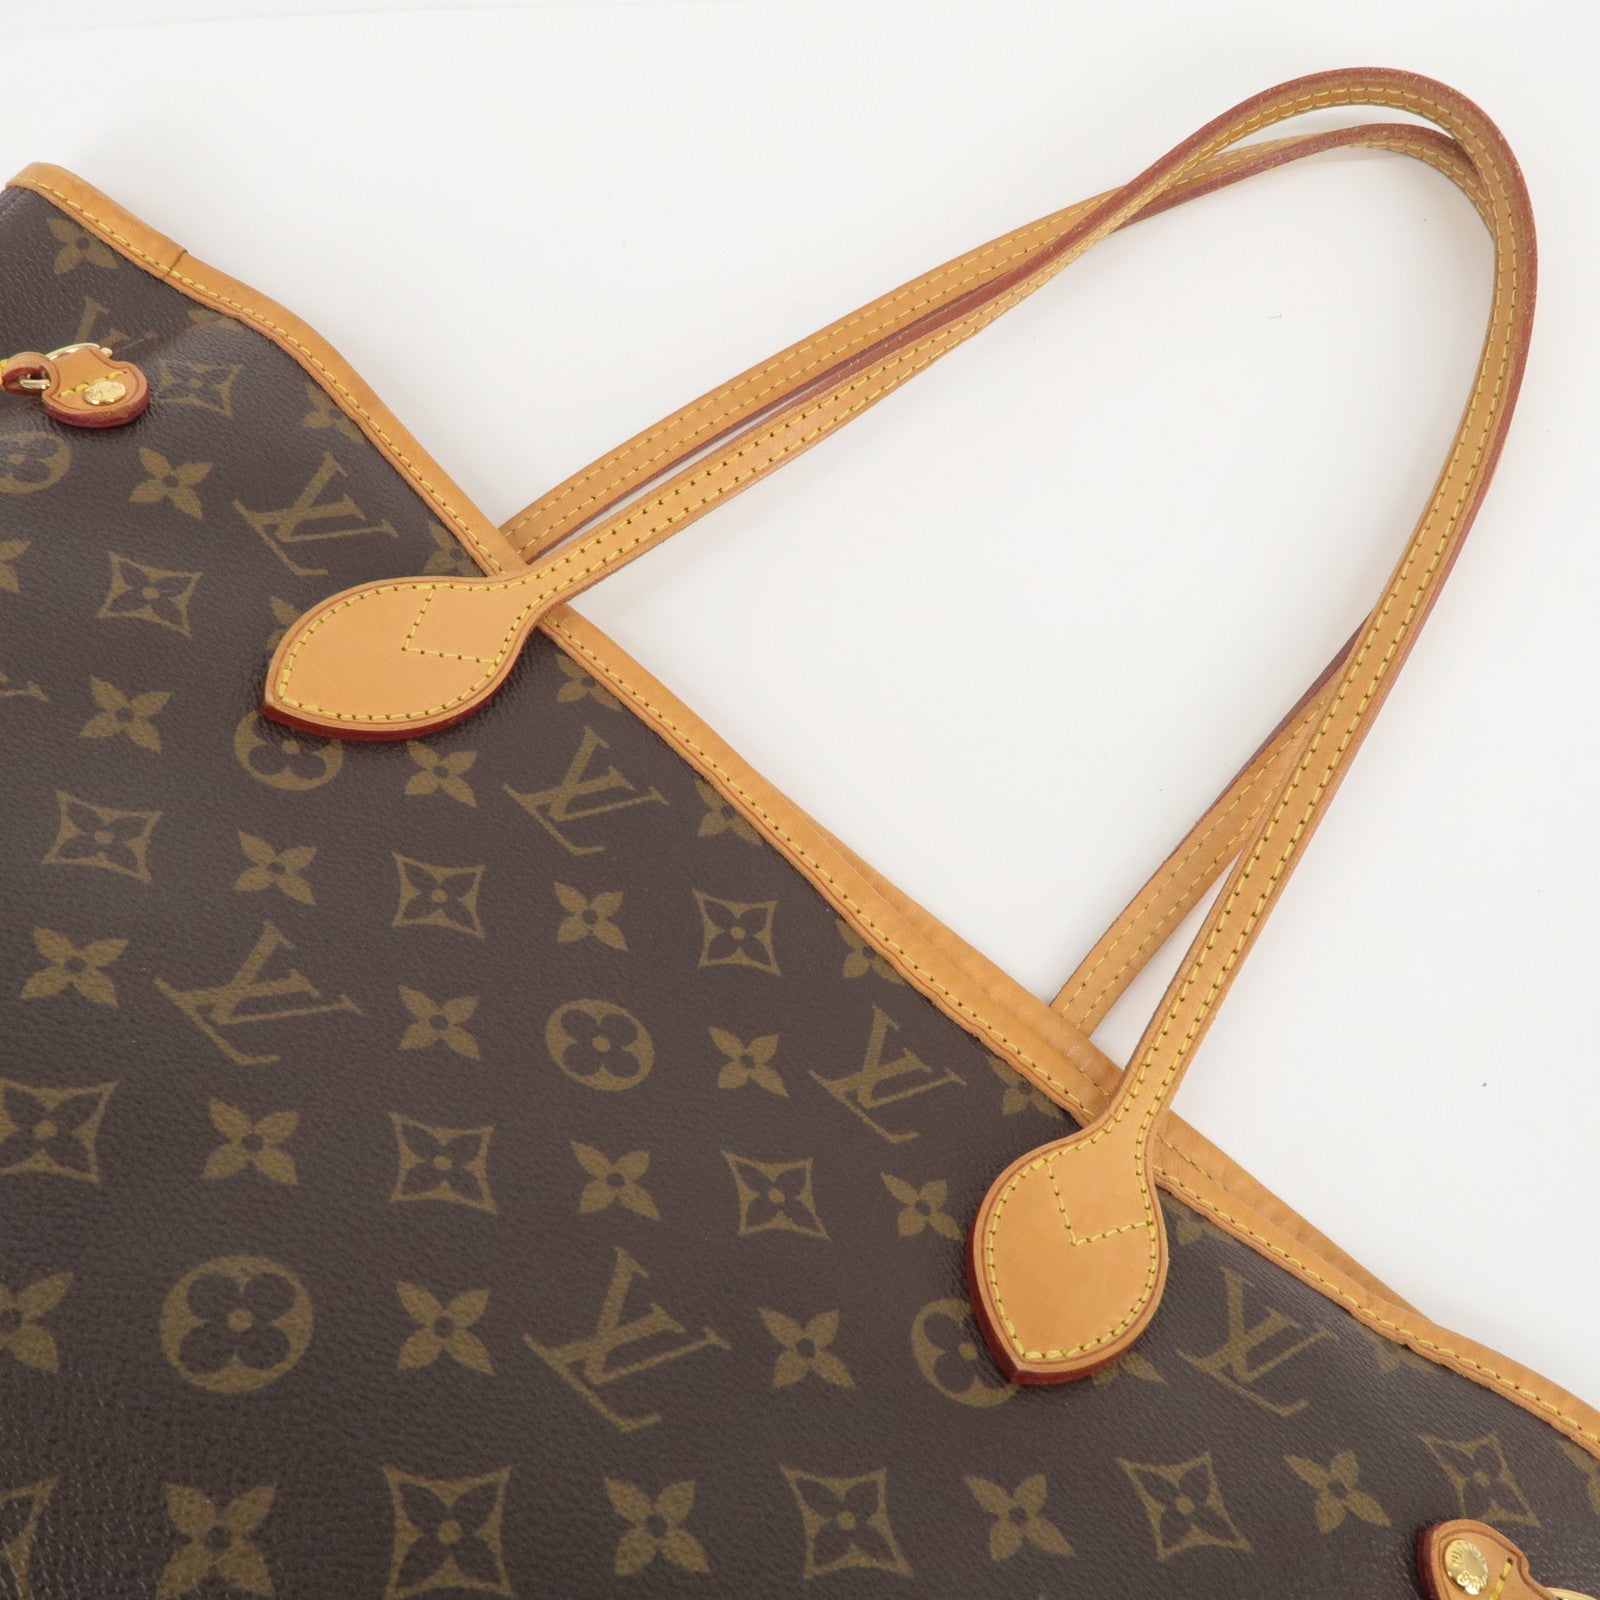 Louis Vuitton Monogram Neverfull MM Leather Tote Shoulder Bag Handbag M40156